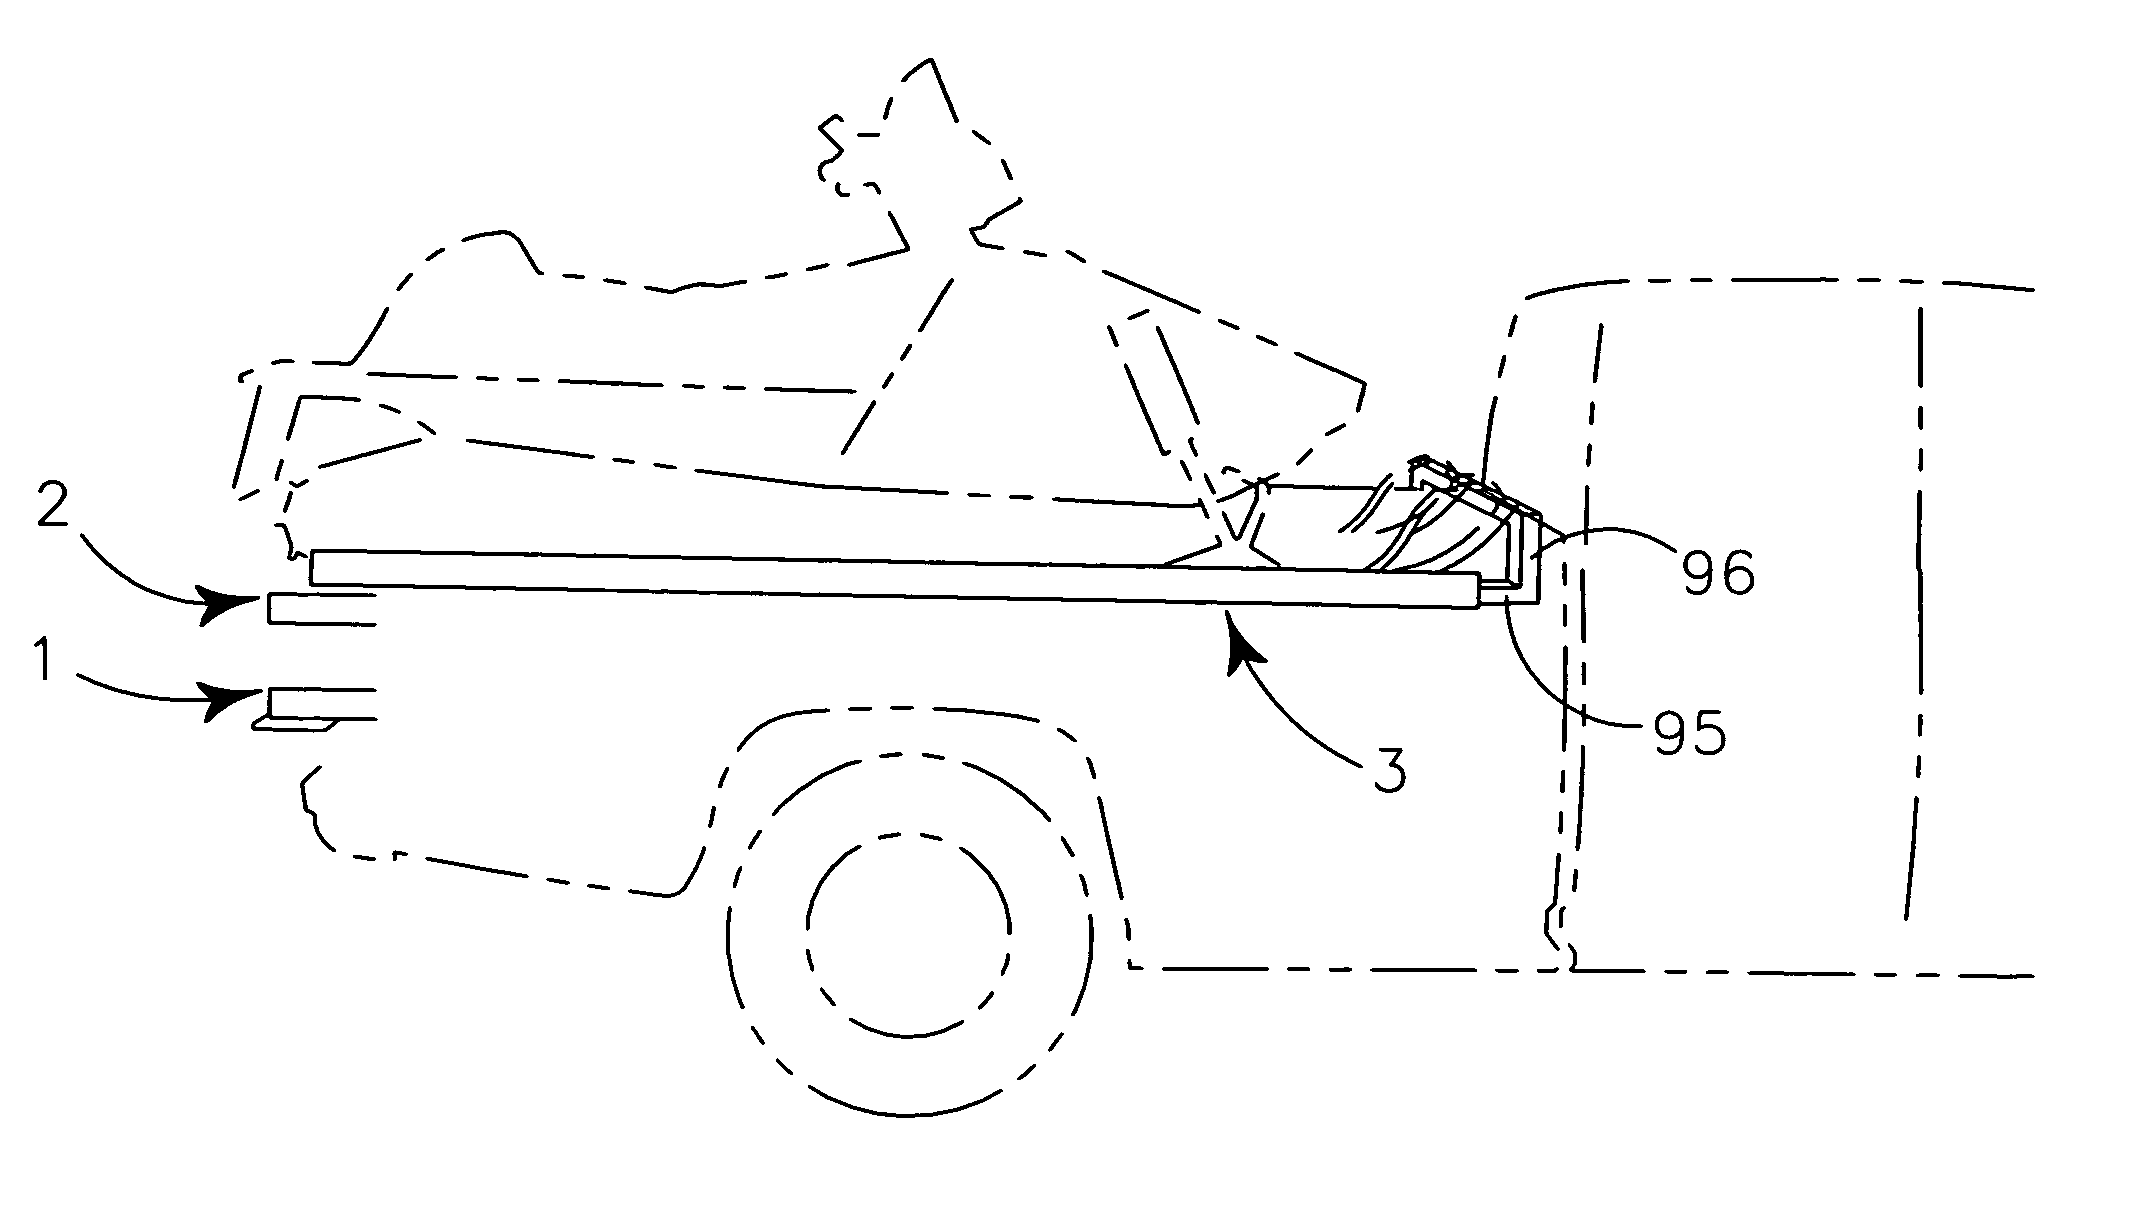 Recreational vehicle loading and transport platform for pickup trucks